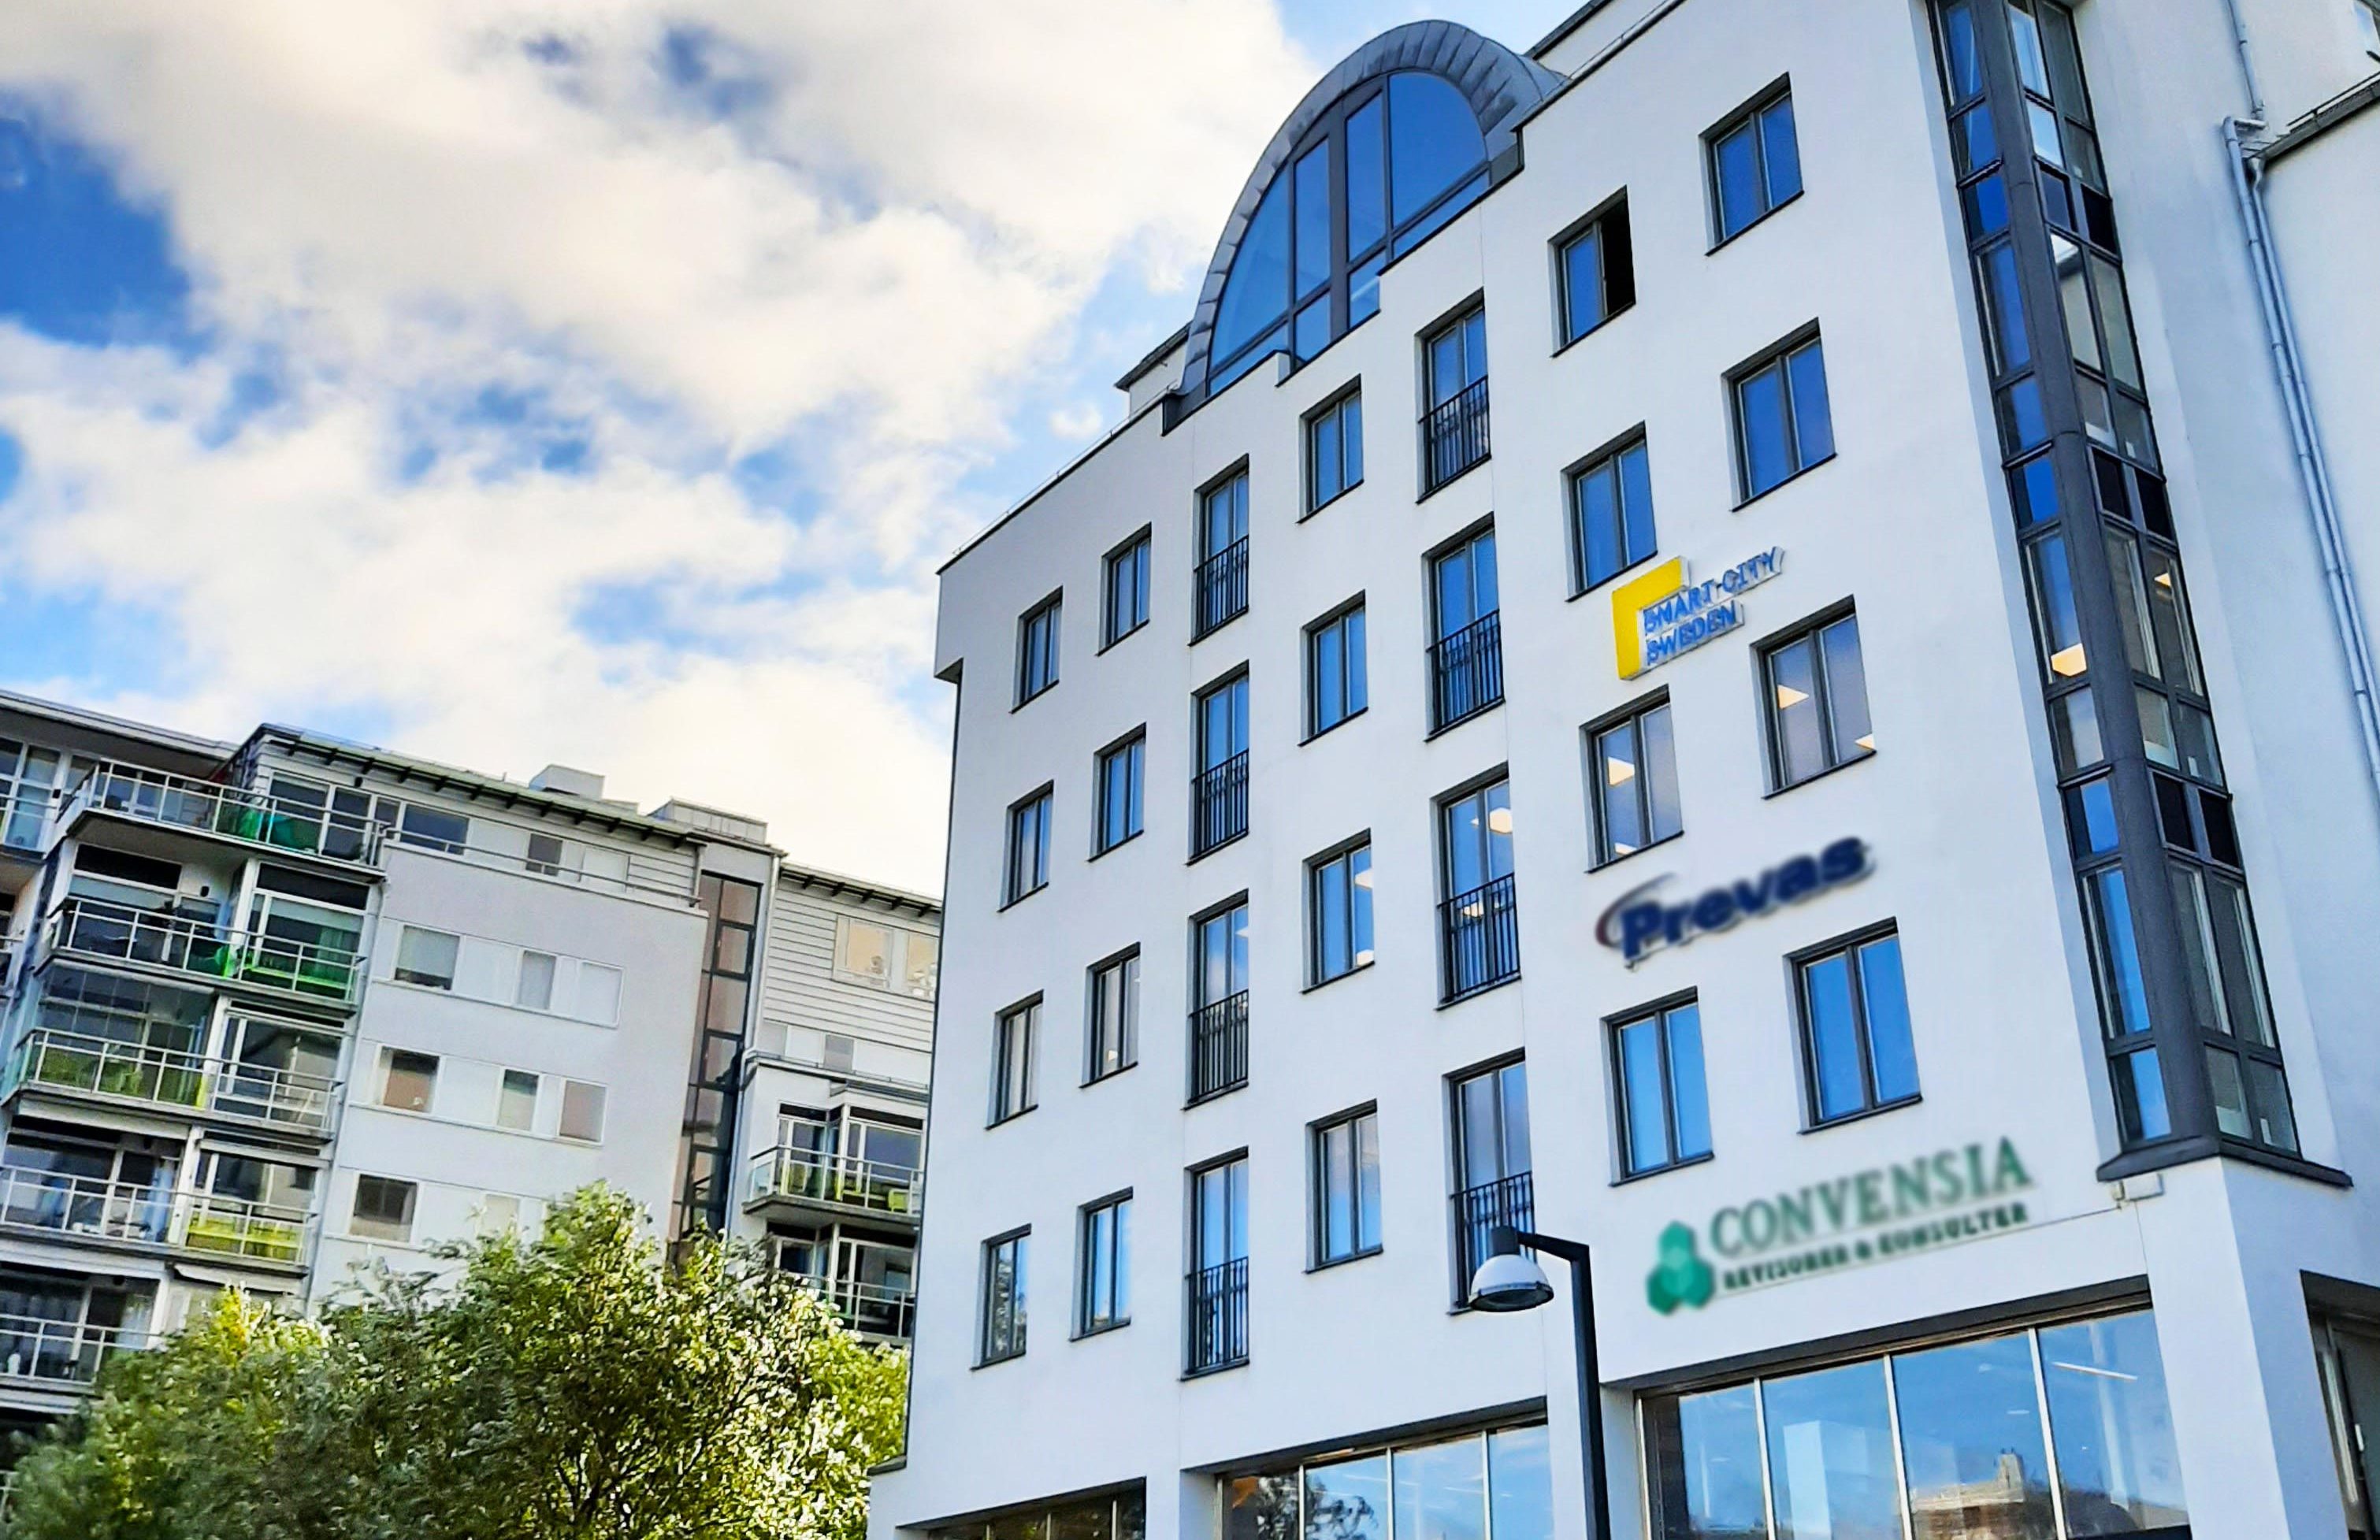 Smart City Sweden HQ building